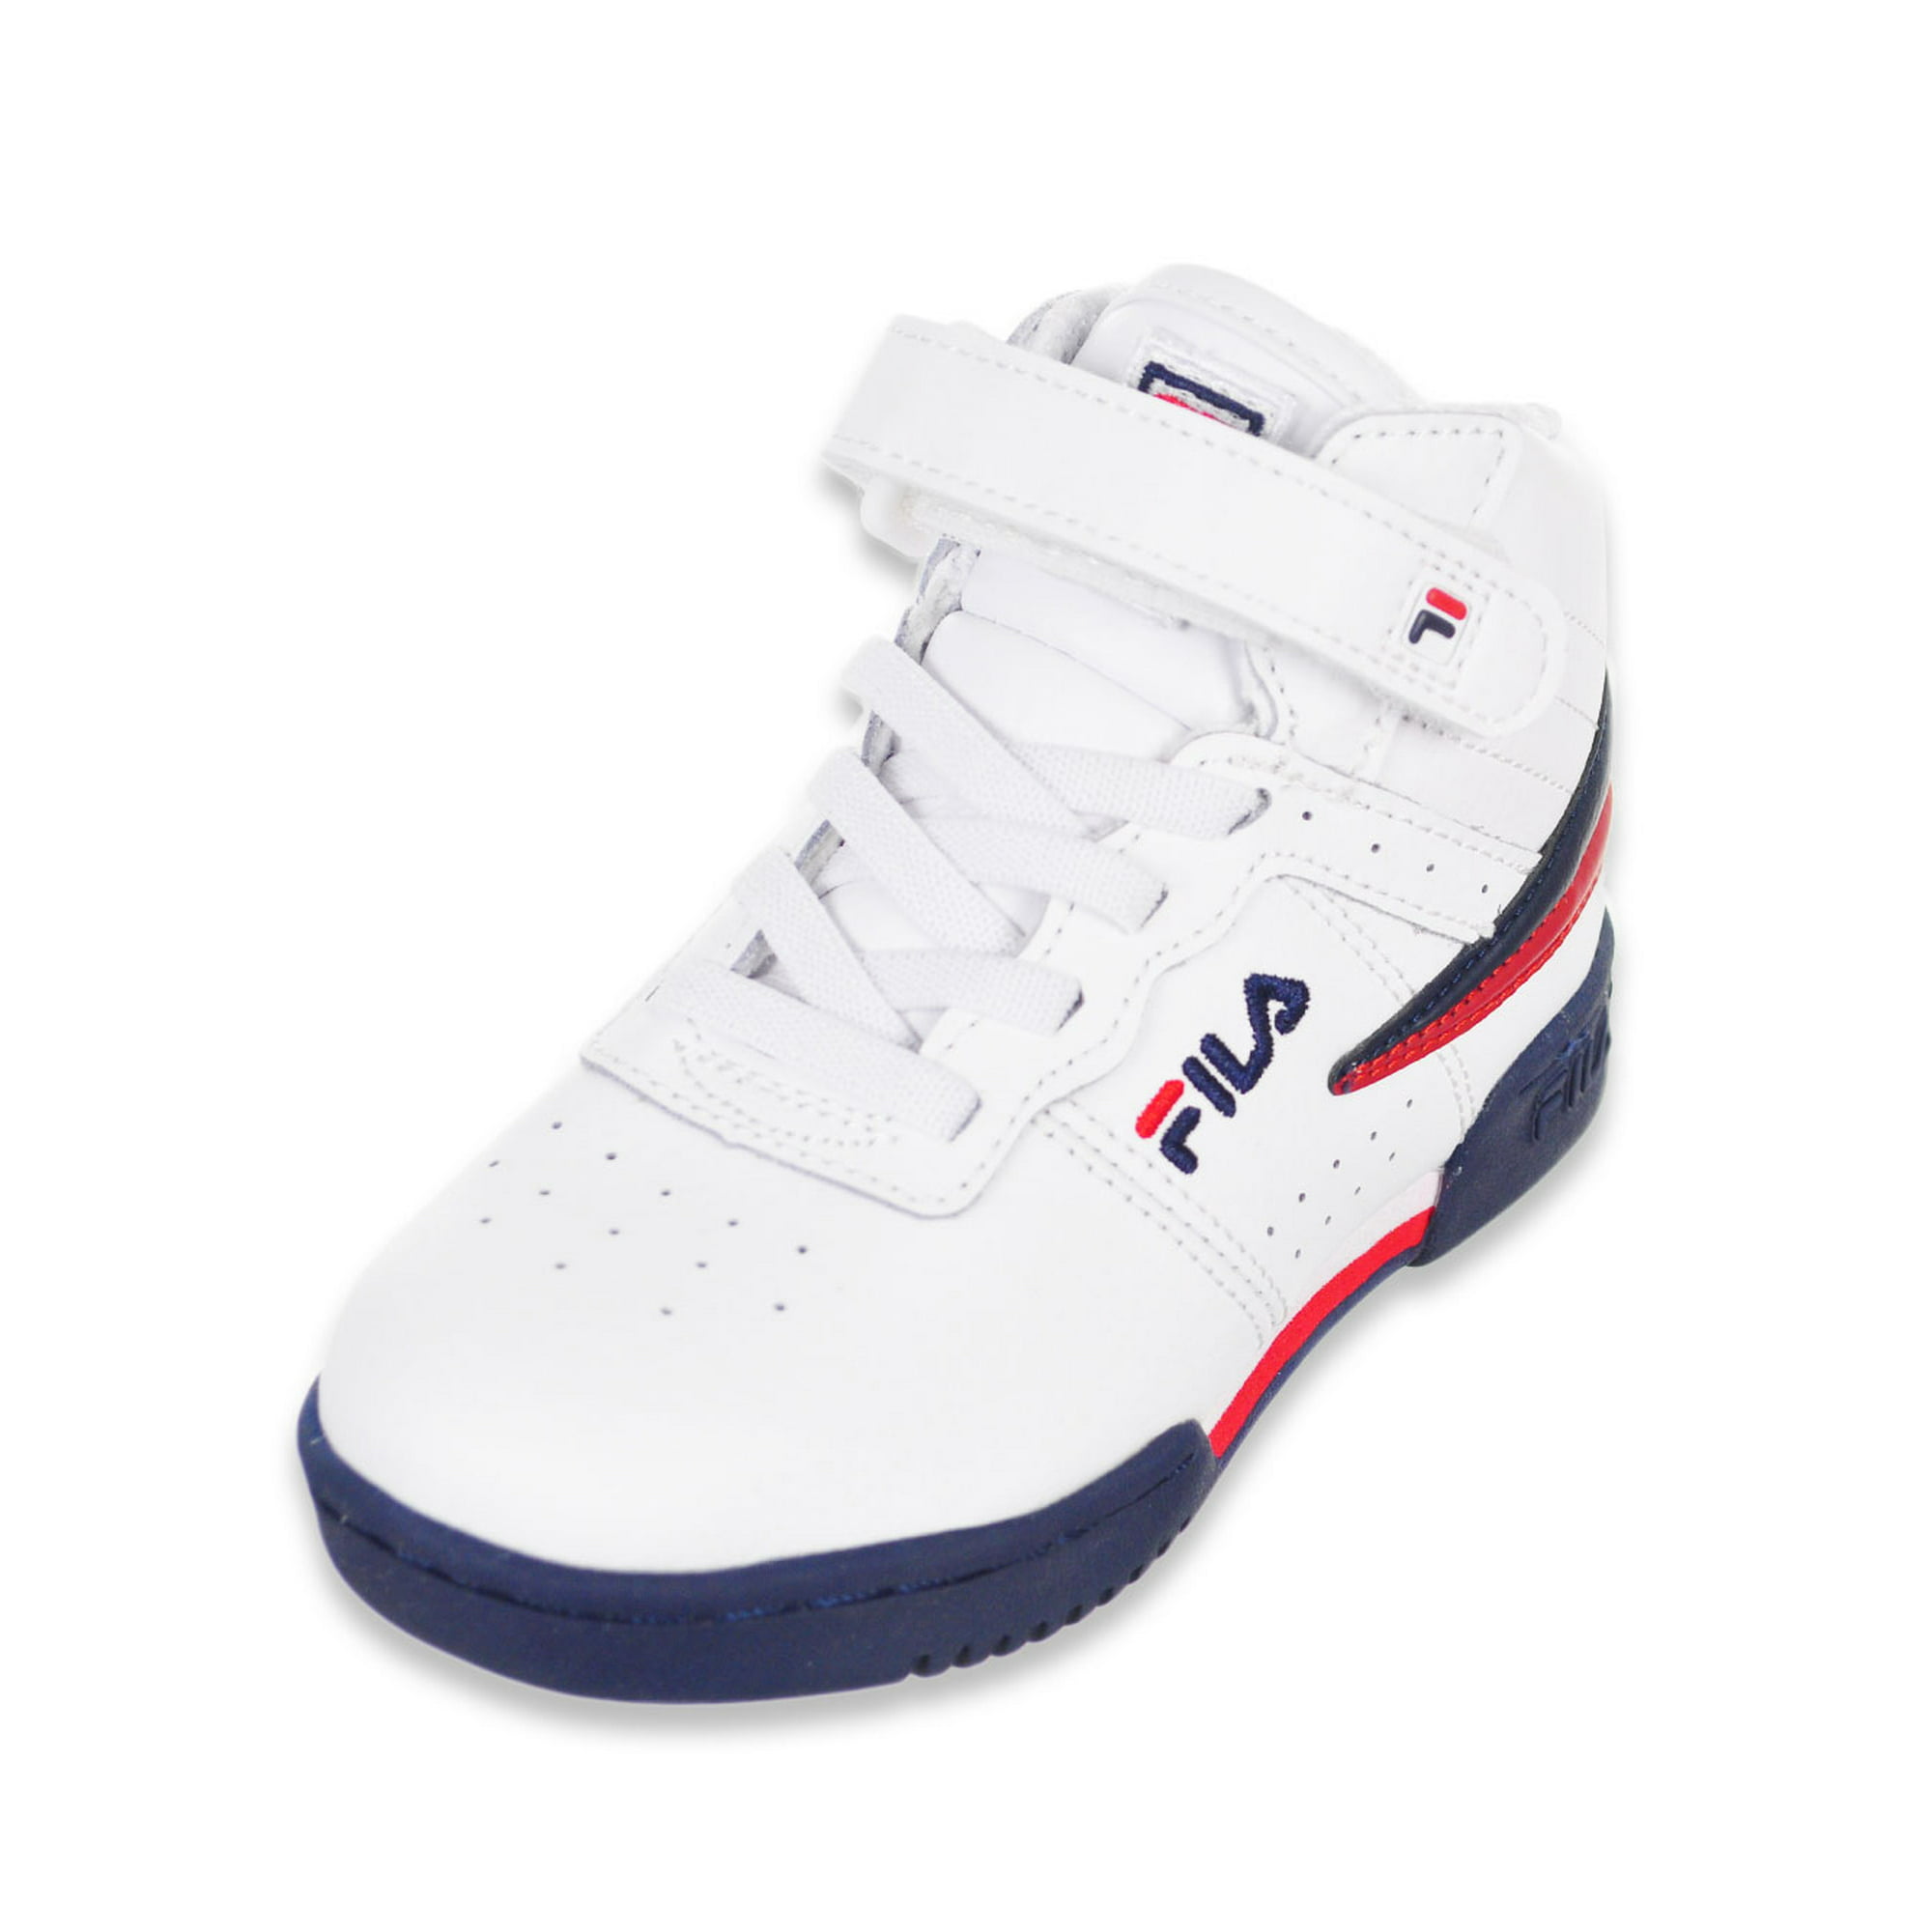 Fila Boys' Heritage Sneakers - white/navy/red, 10 toddler -